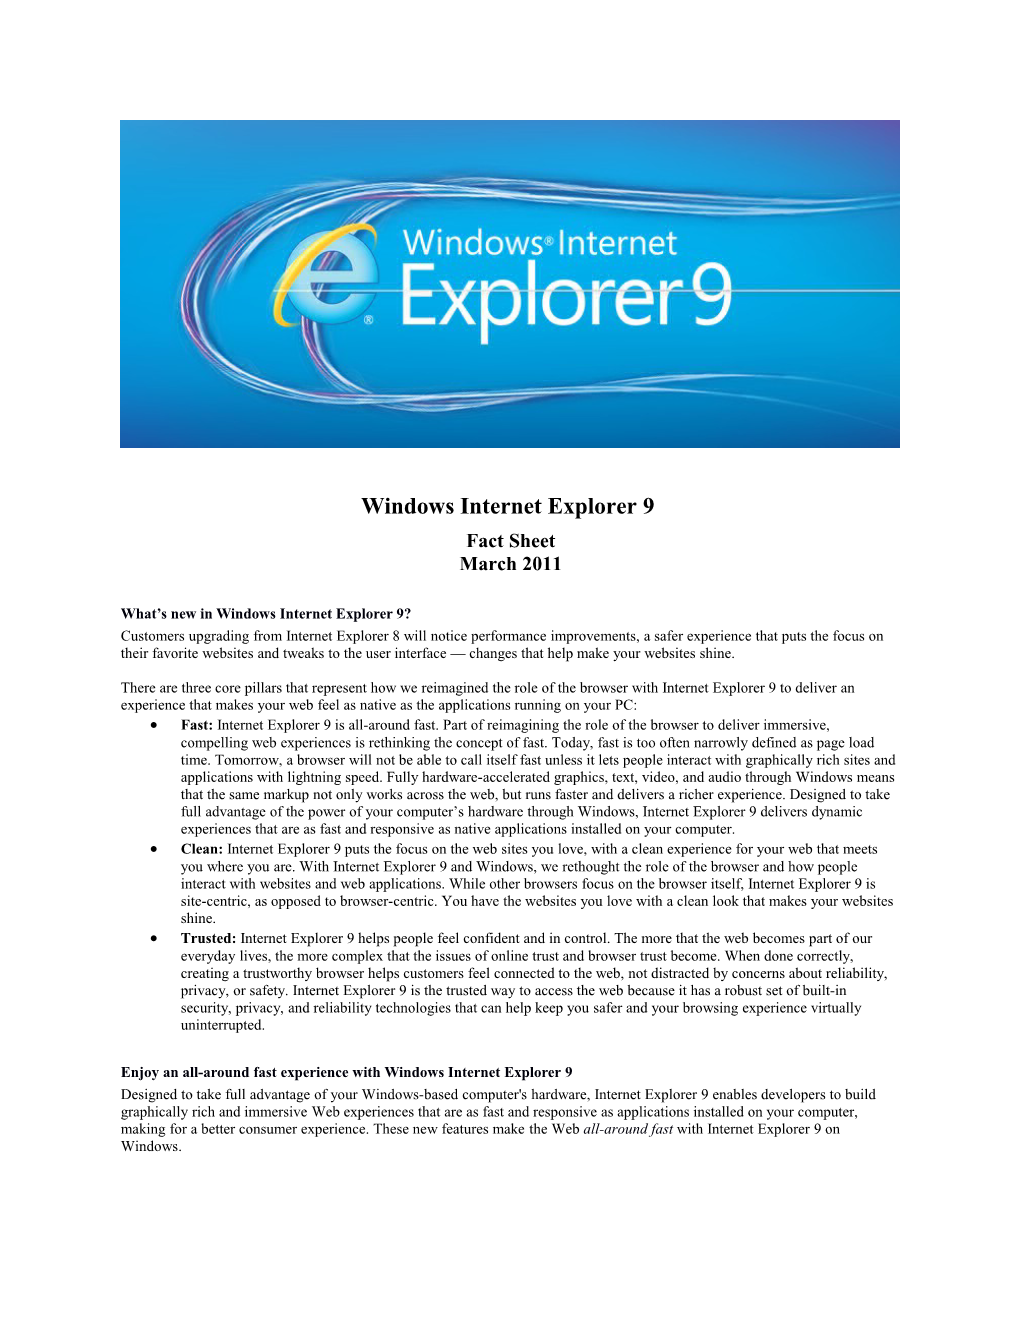 What S New in Windows Internet Explorer 9?